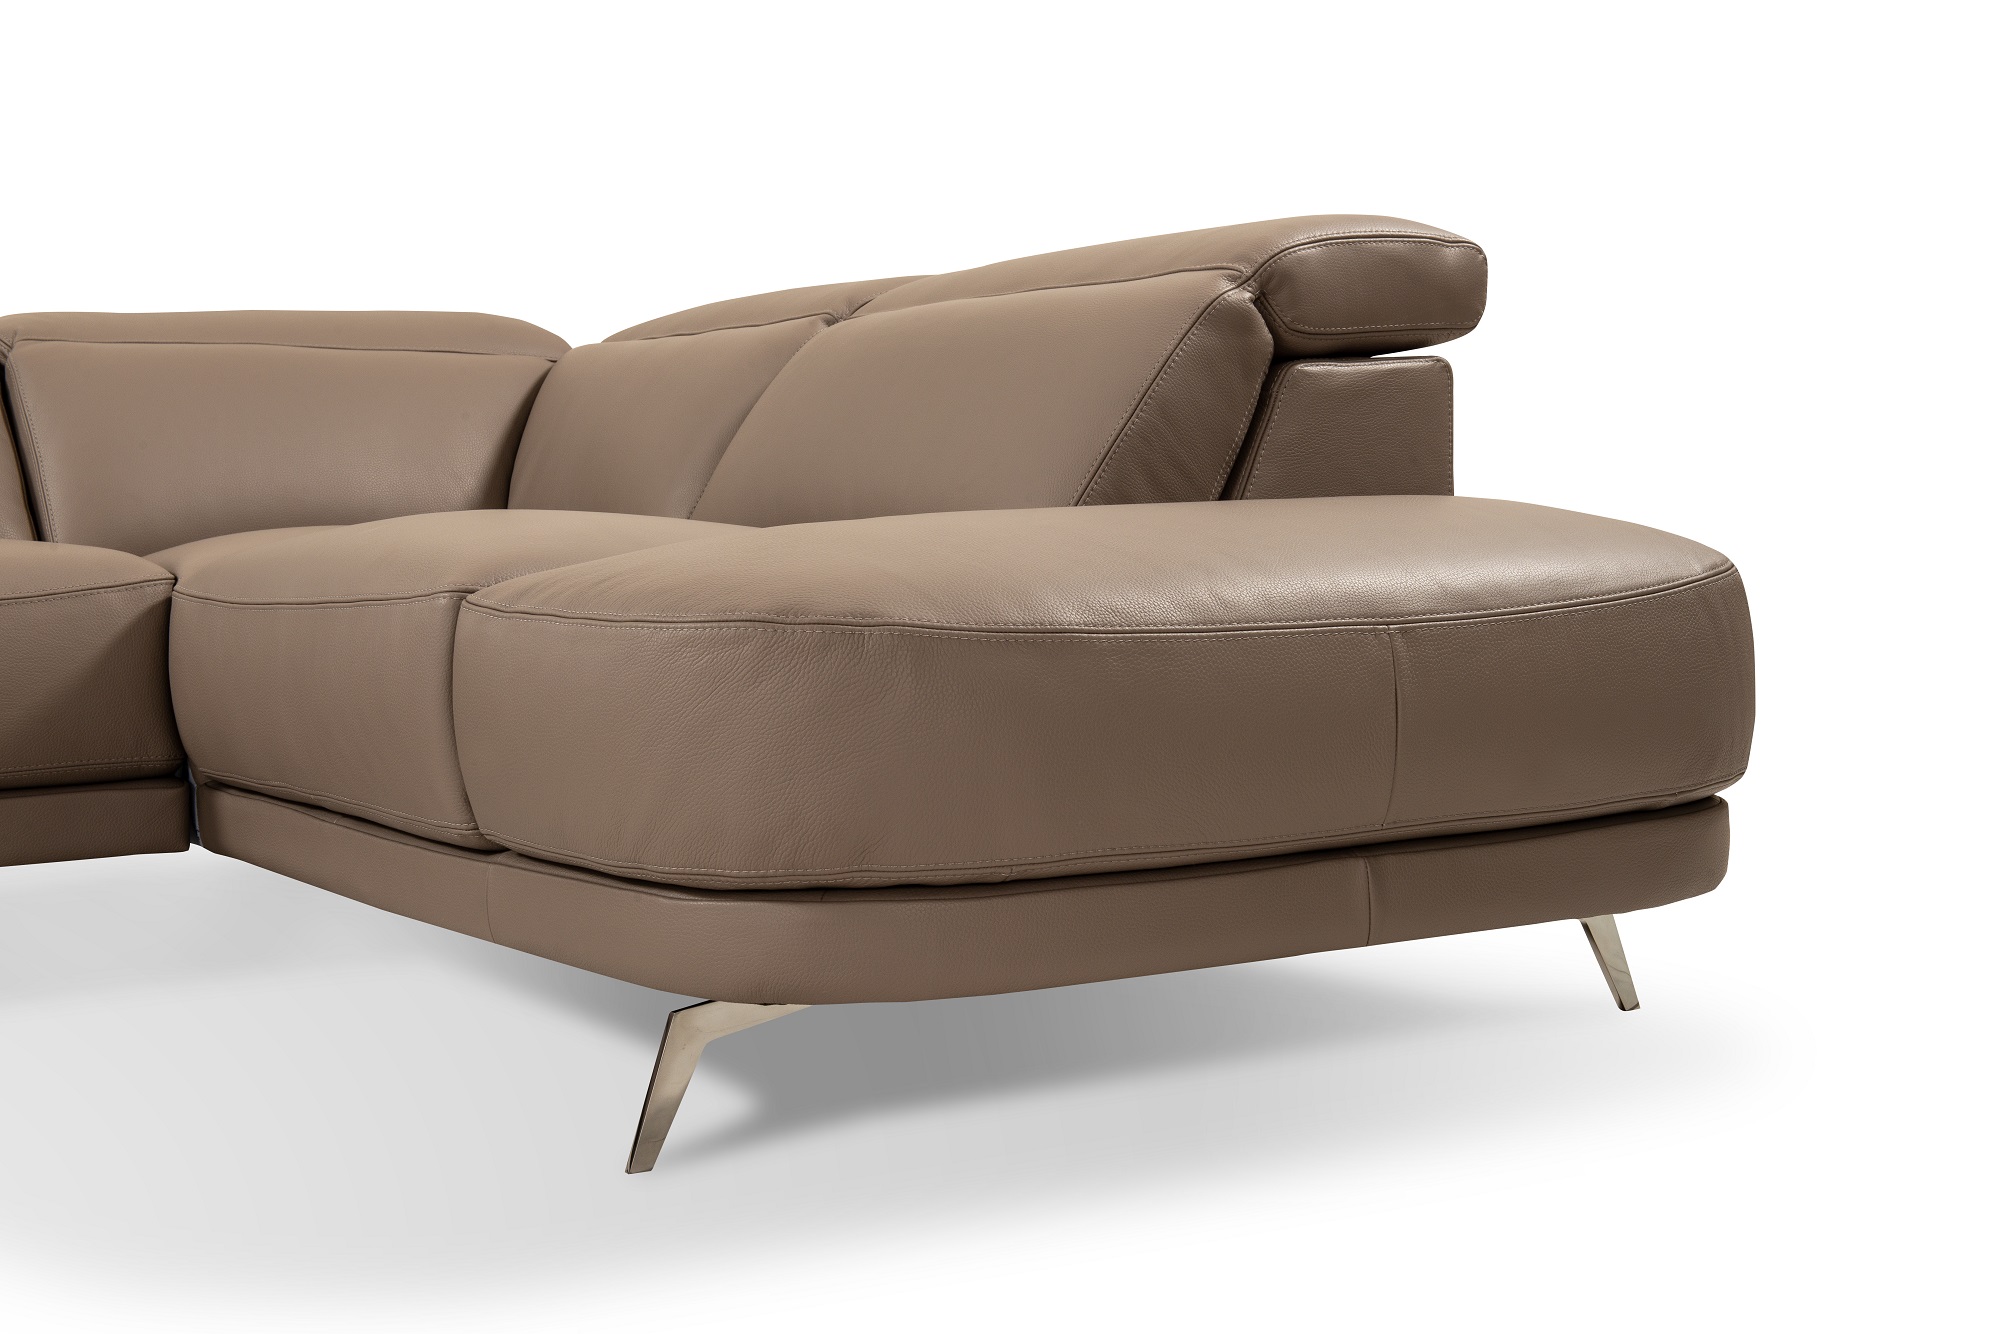 High-class Leather Upholstery Corner L-shape Sofa